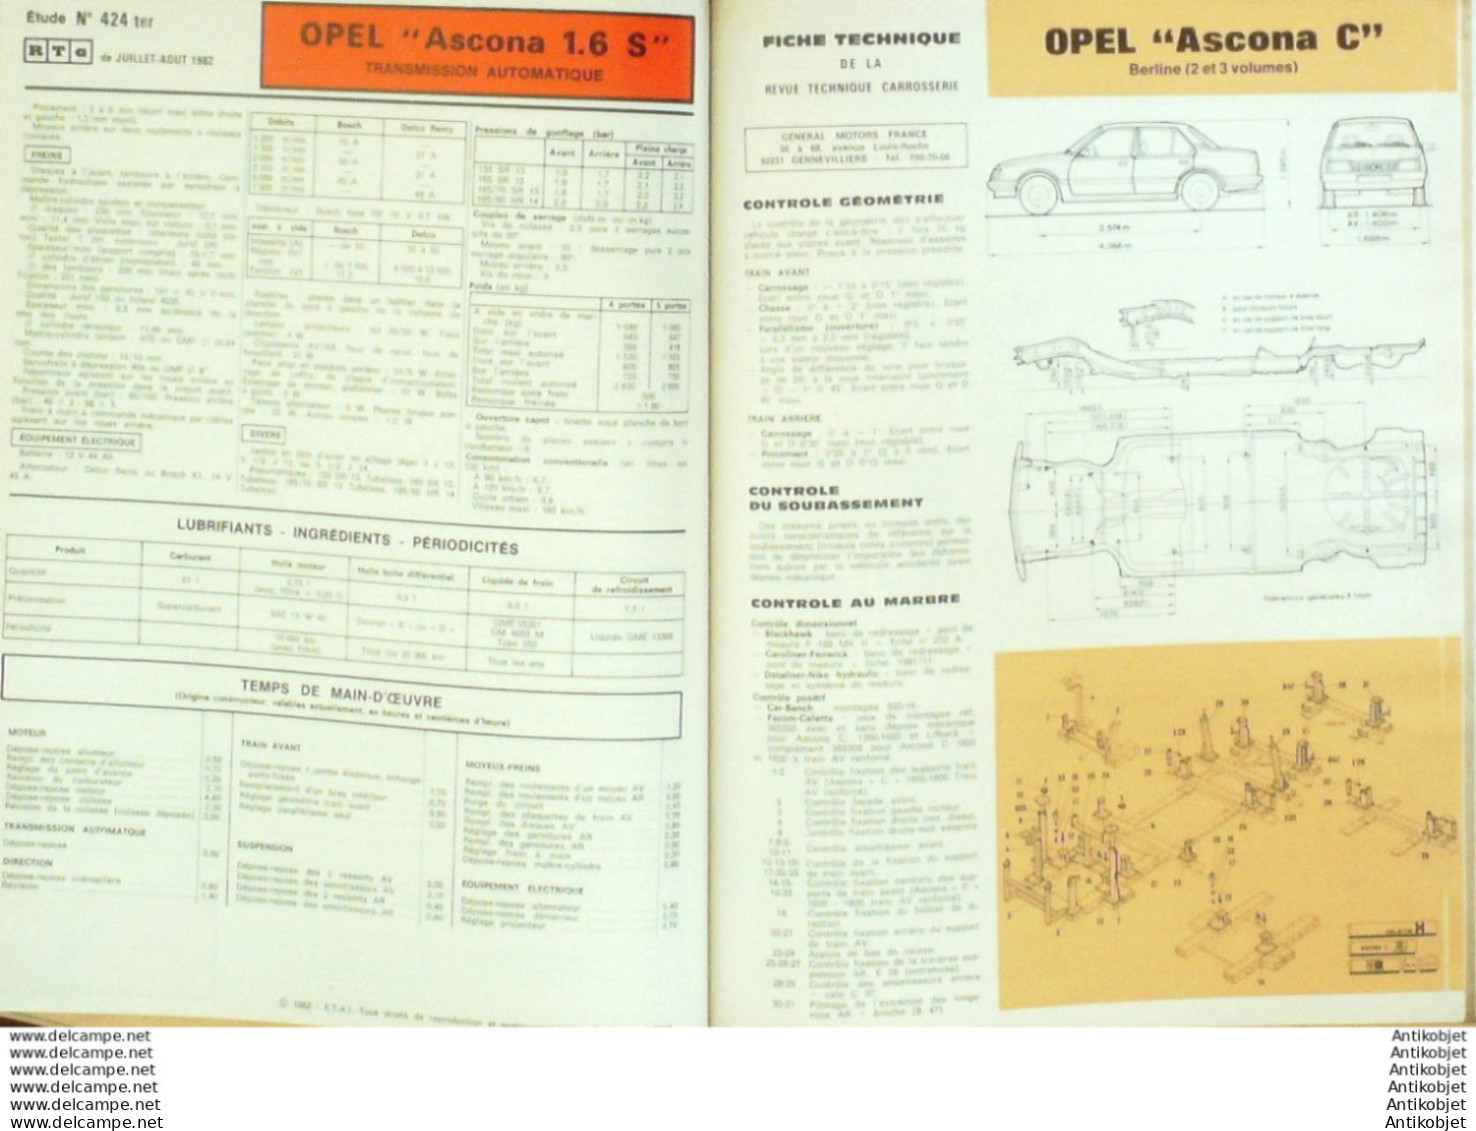 Revue Technique Automobile Opel Ascona Renault 18 & R20   N°424 - Auto/Motor